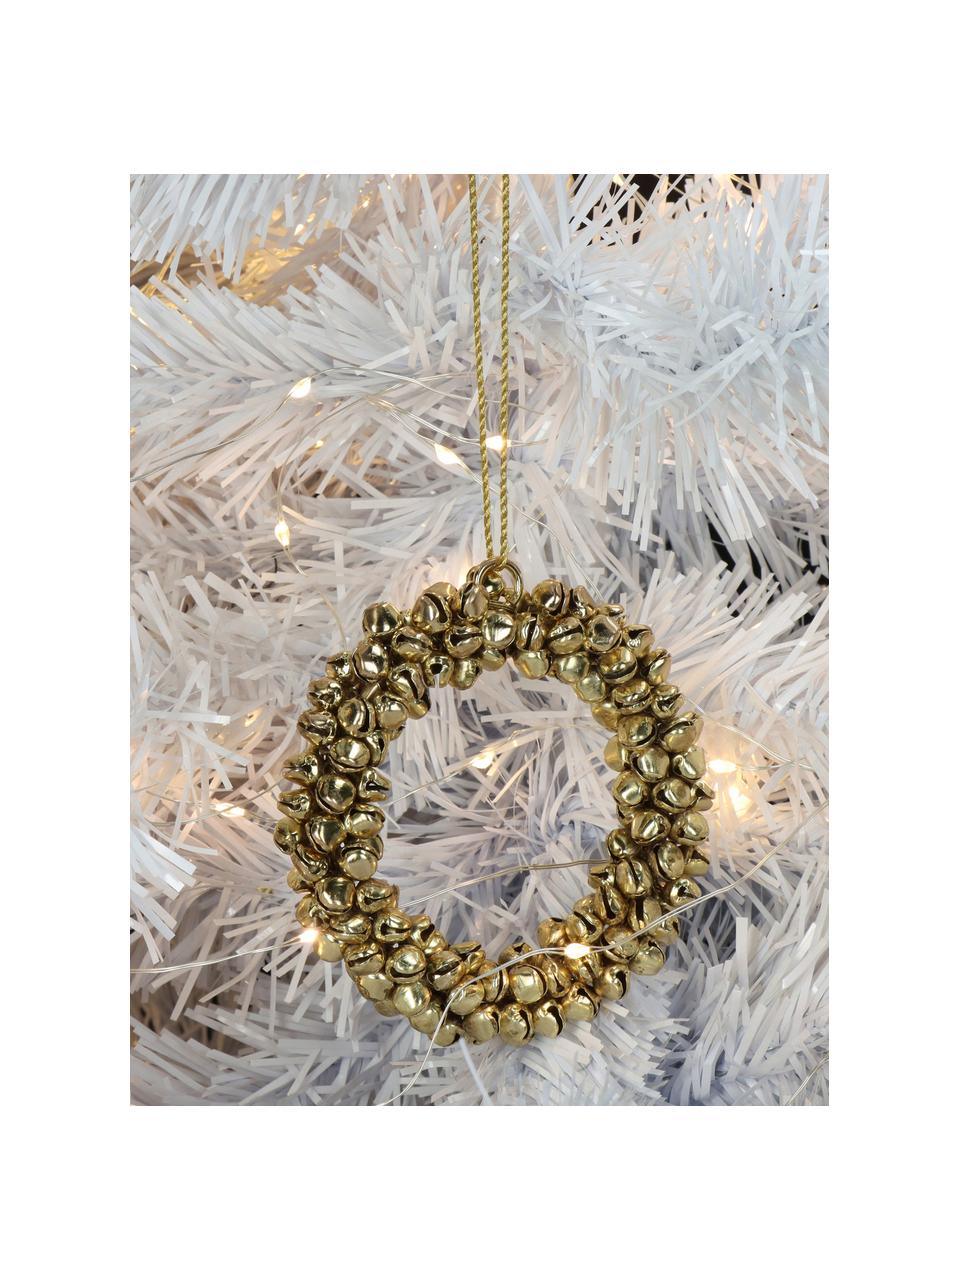 Ozdoba na vánoční stromeček s rolničkami Wreath, Potažený kov, Zlatá, Ø 9 cm